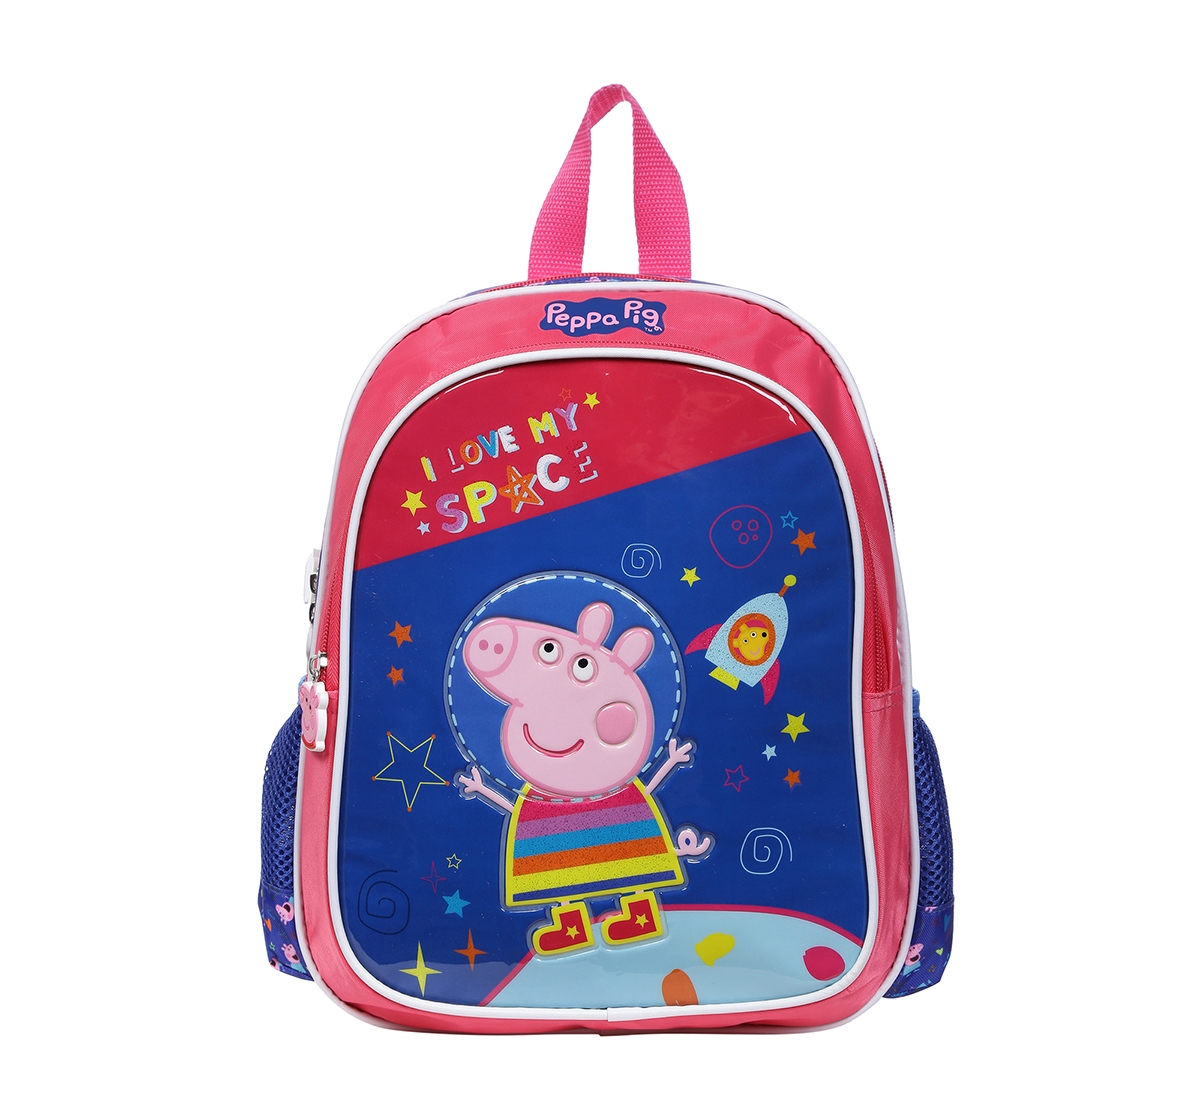 Peppa Pig |  Peppa Pig I Love My Space 12 Backpack Bags for Kids age 3Y+ 